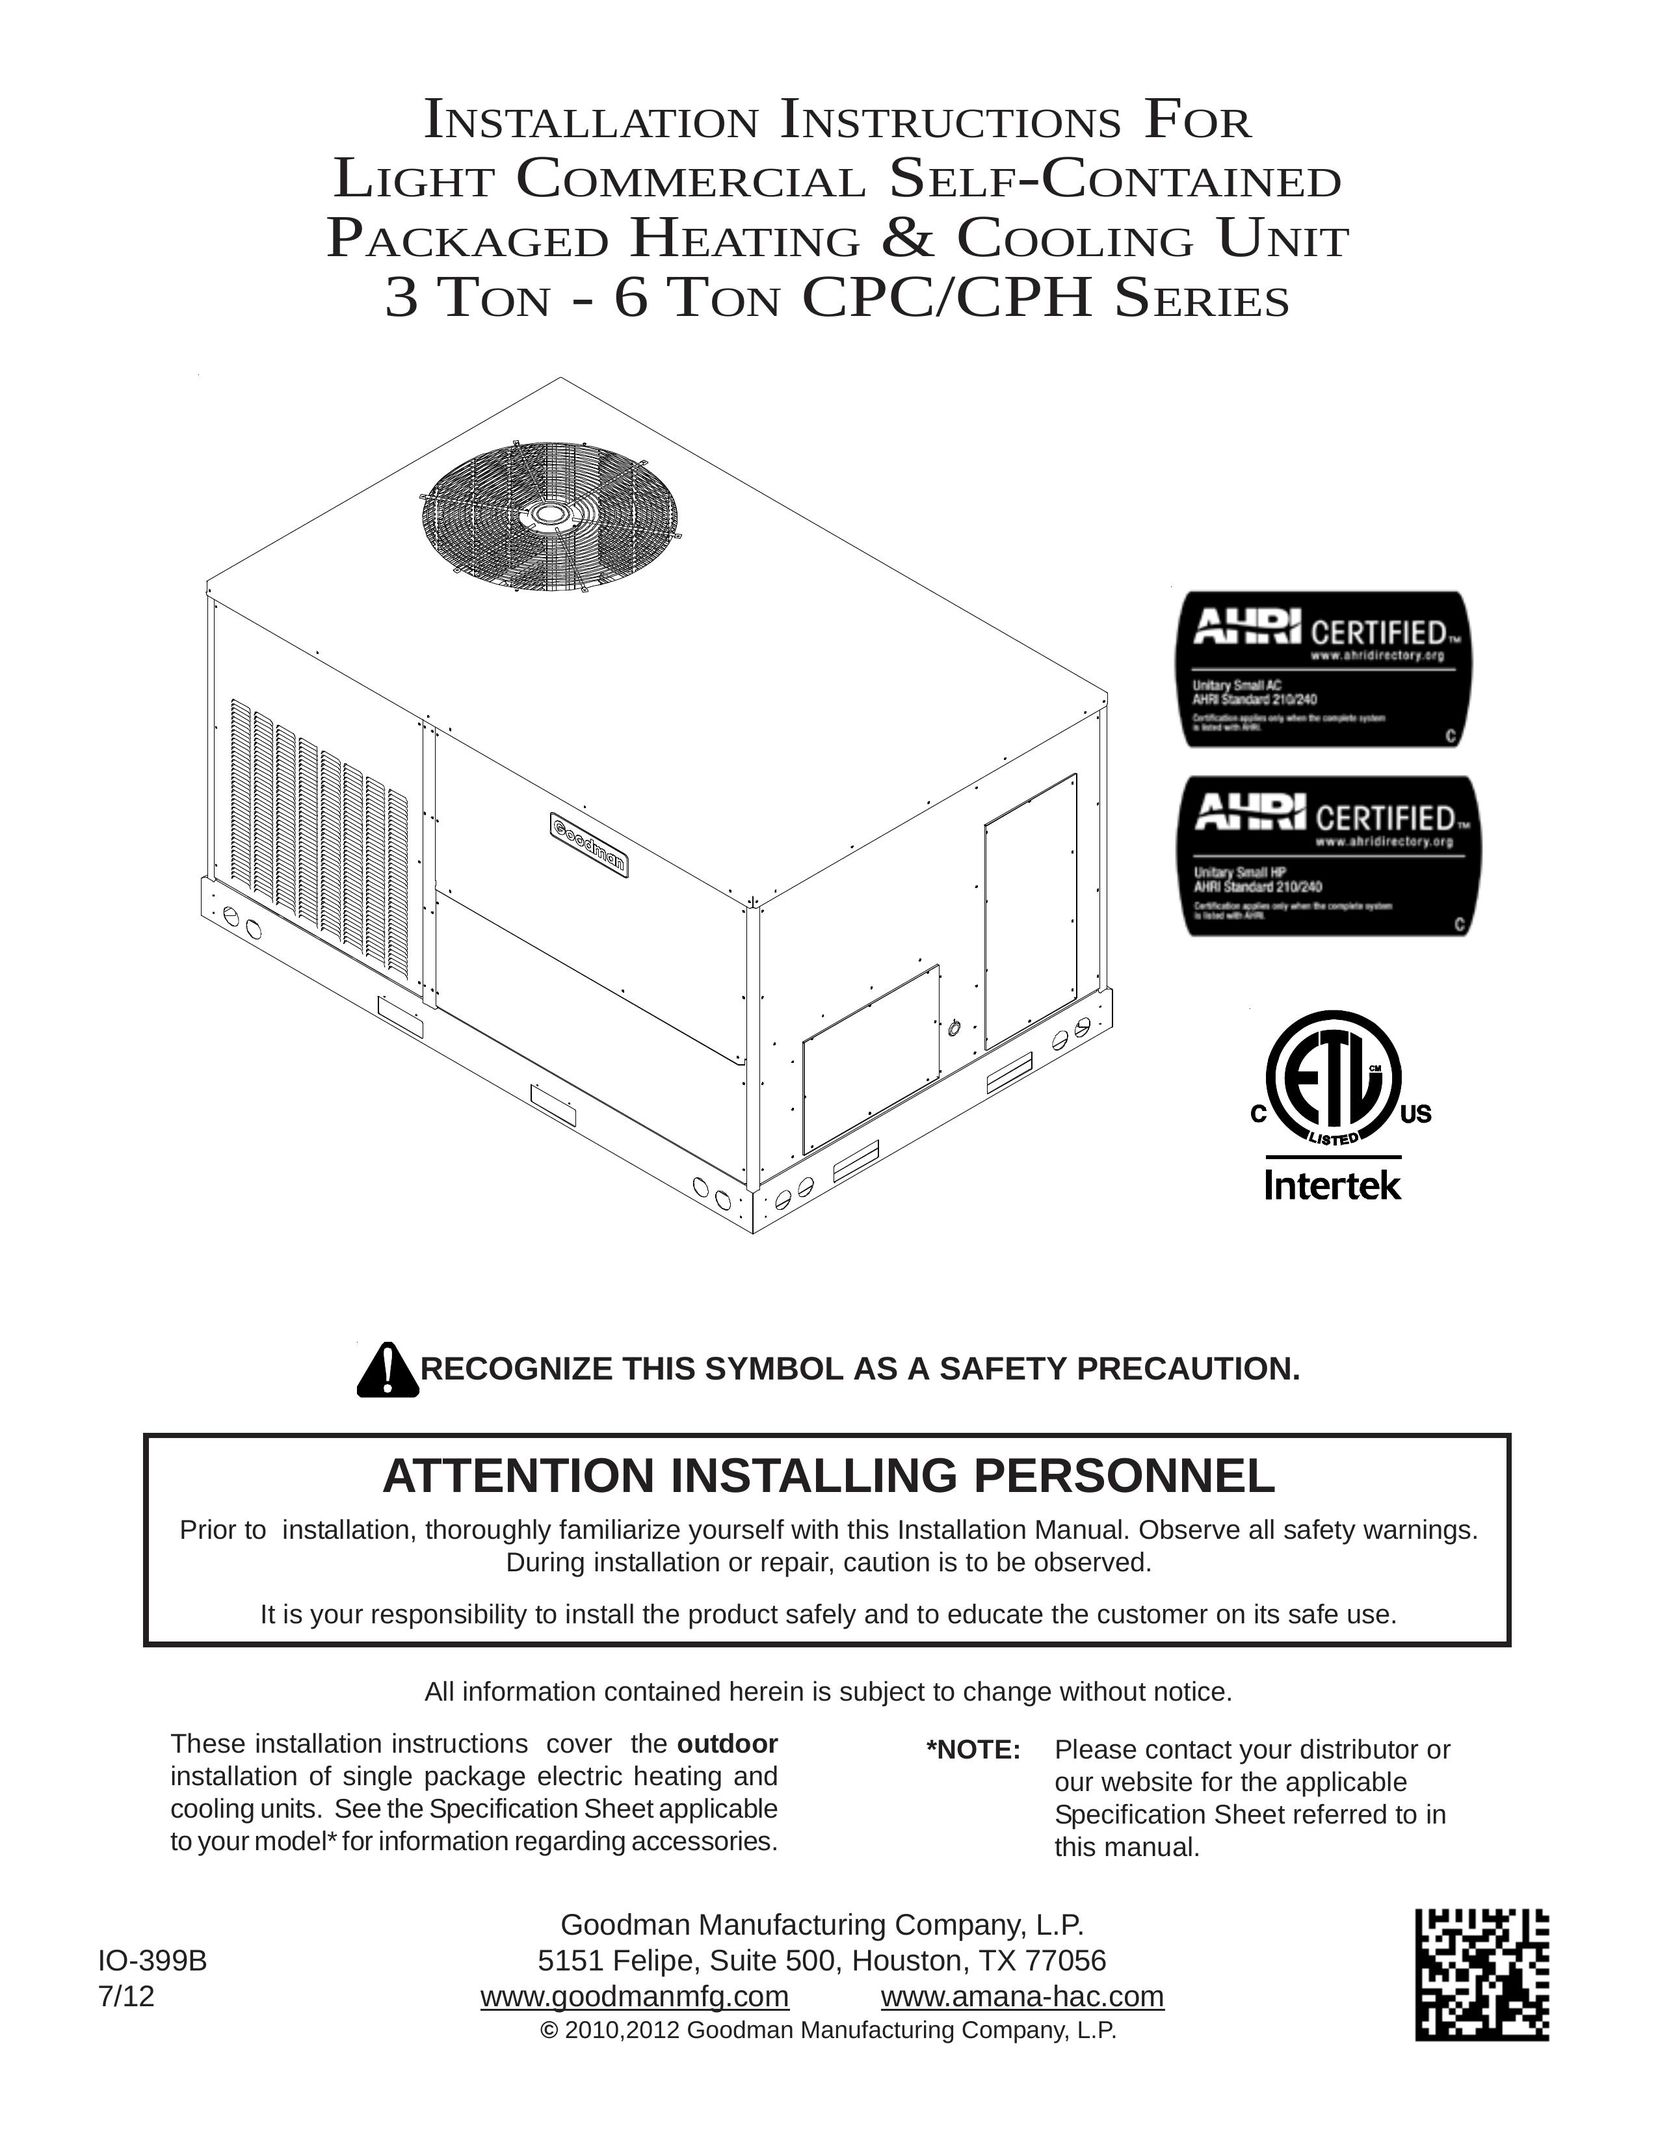 Goodman Mfg 3 Ton- 6 Ton CPC/CPH Series Air Conditioner User Manual